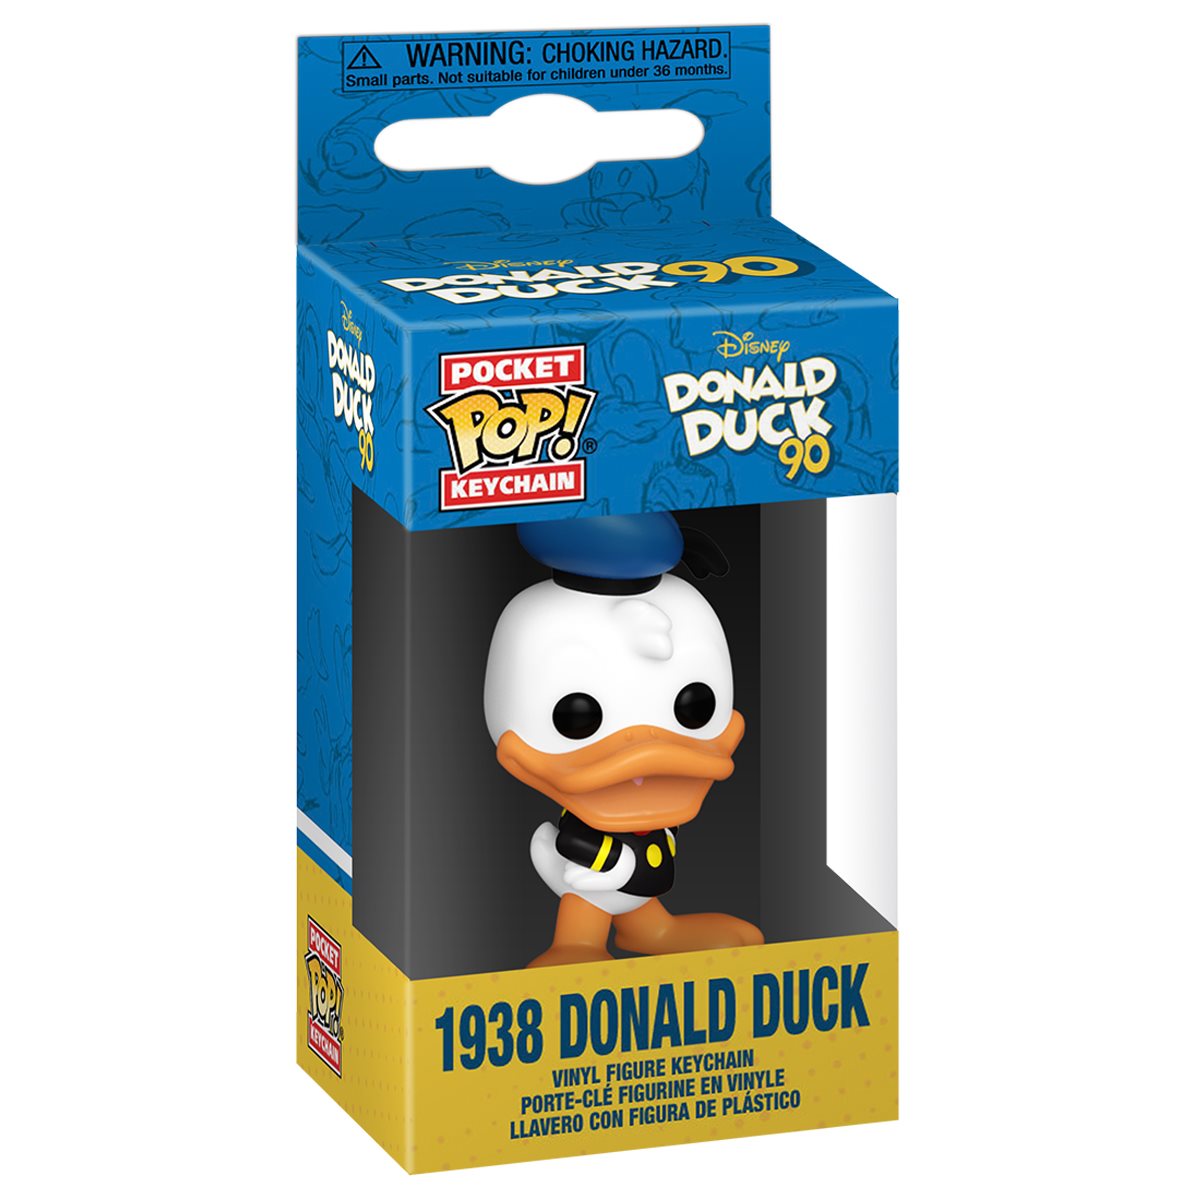 Donald Duck 90th Anniversary 1938 Donald Duck Funko Pocket Pop! Key Chain Box